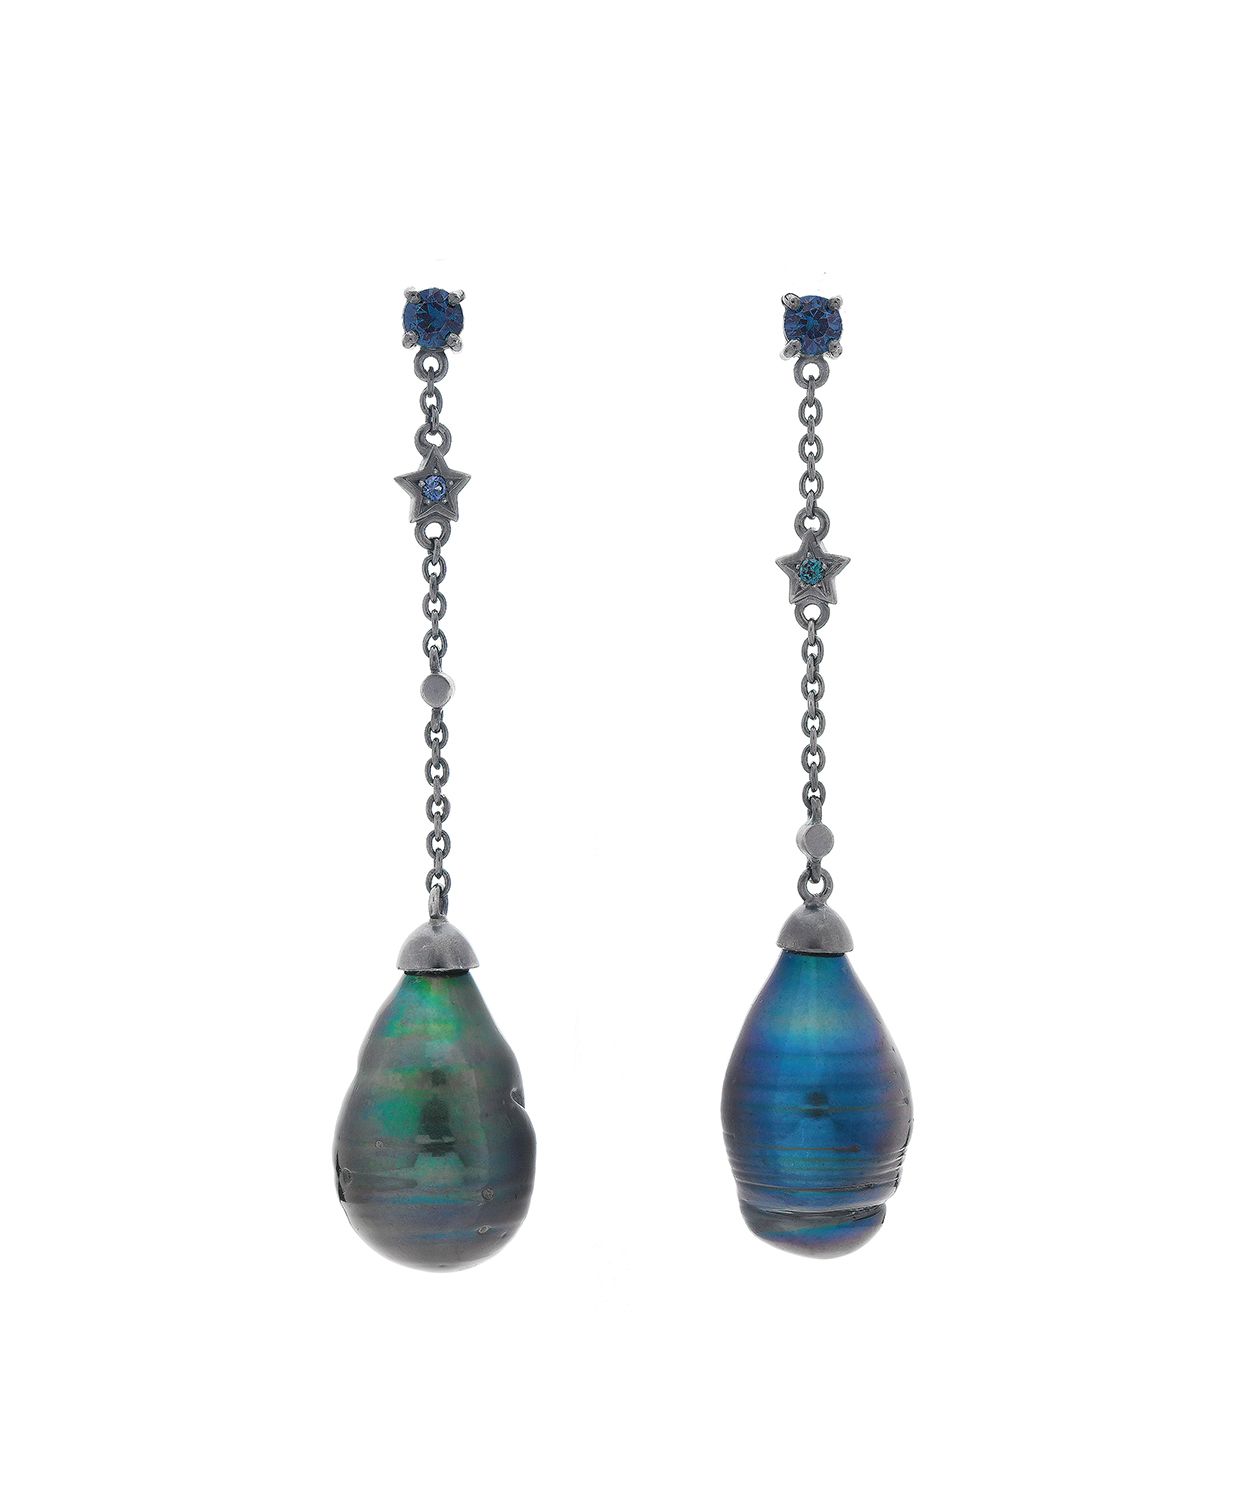 Dark Moonlight Earrings - Filigree Jewellery Christchurch, New Zealand